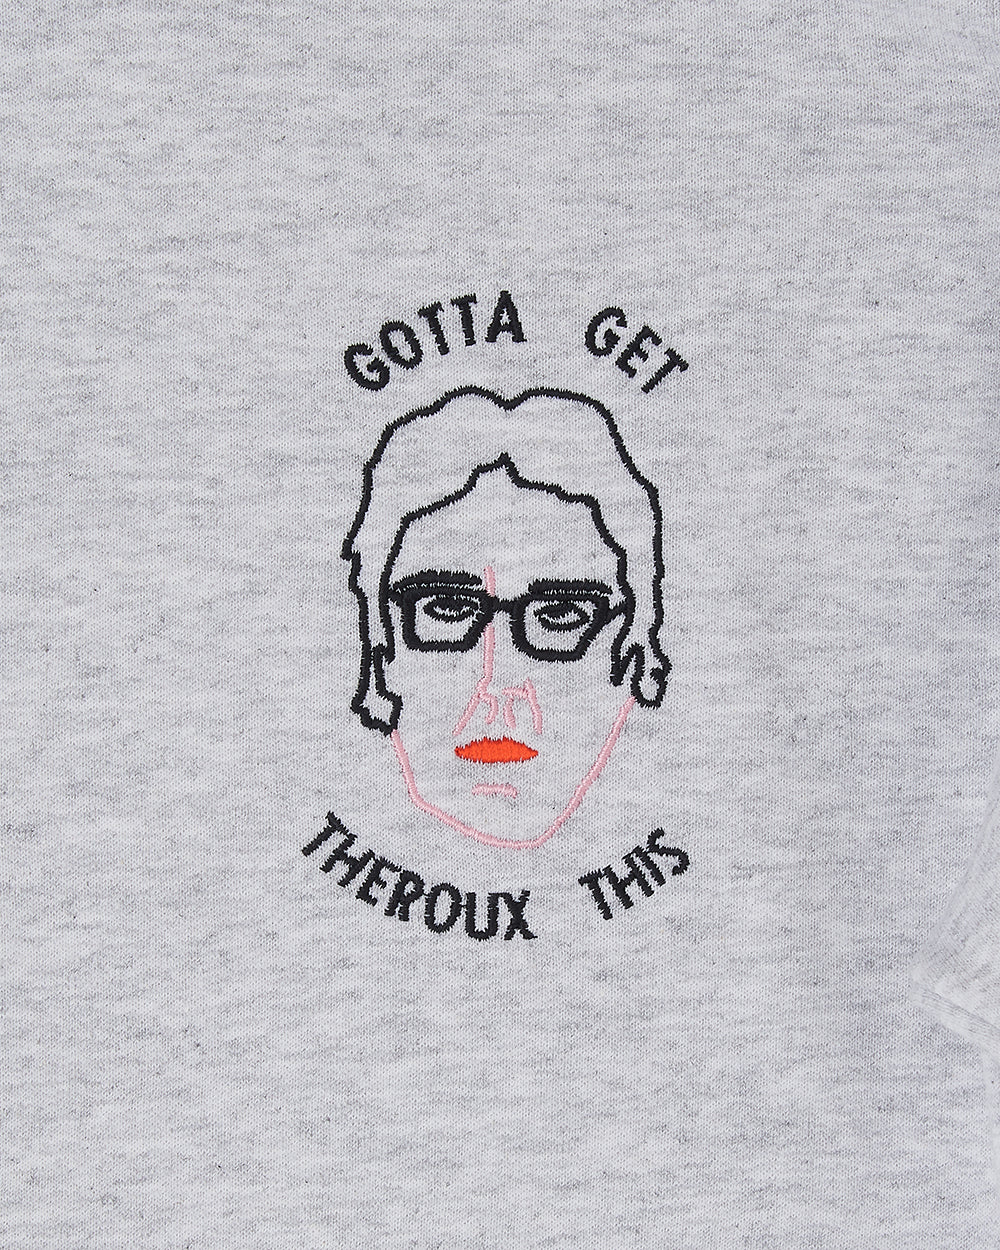 Gotta Get Theroux This Embroidered Sweatshirt